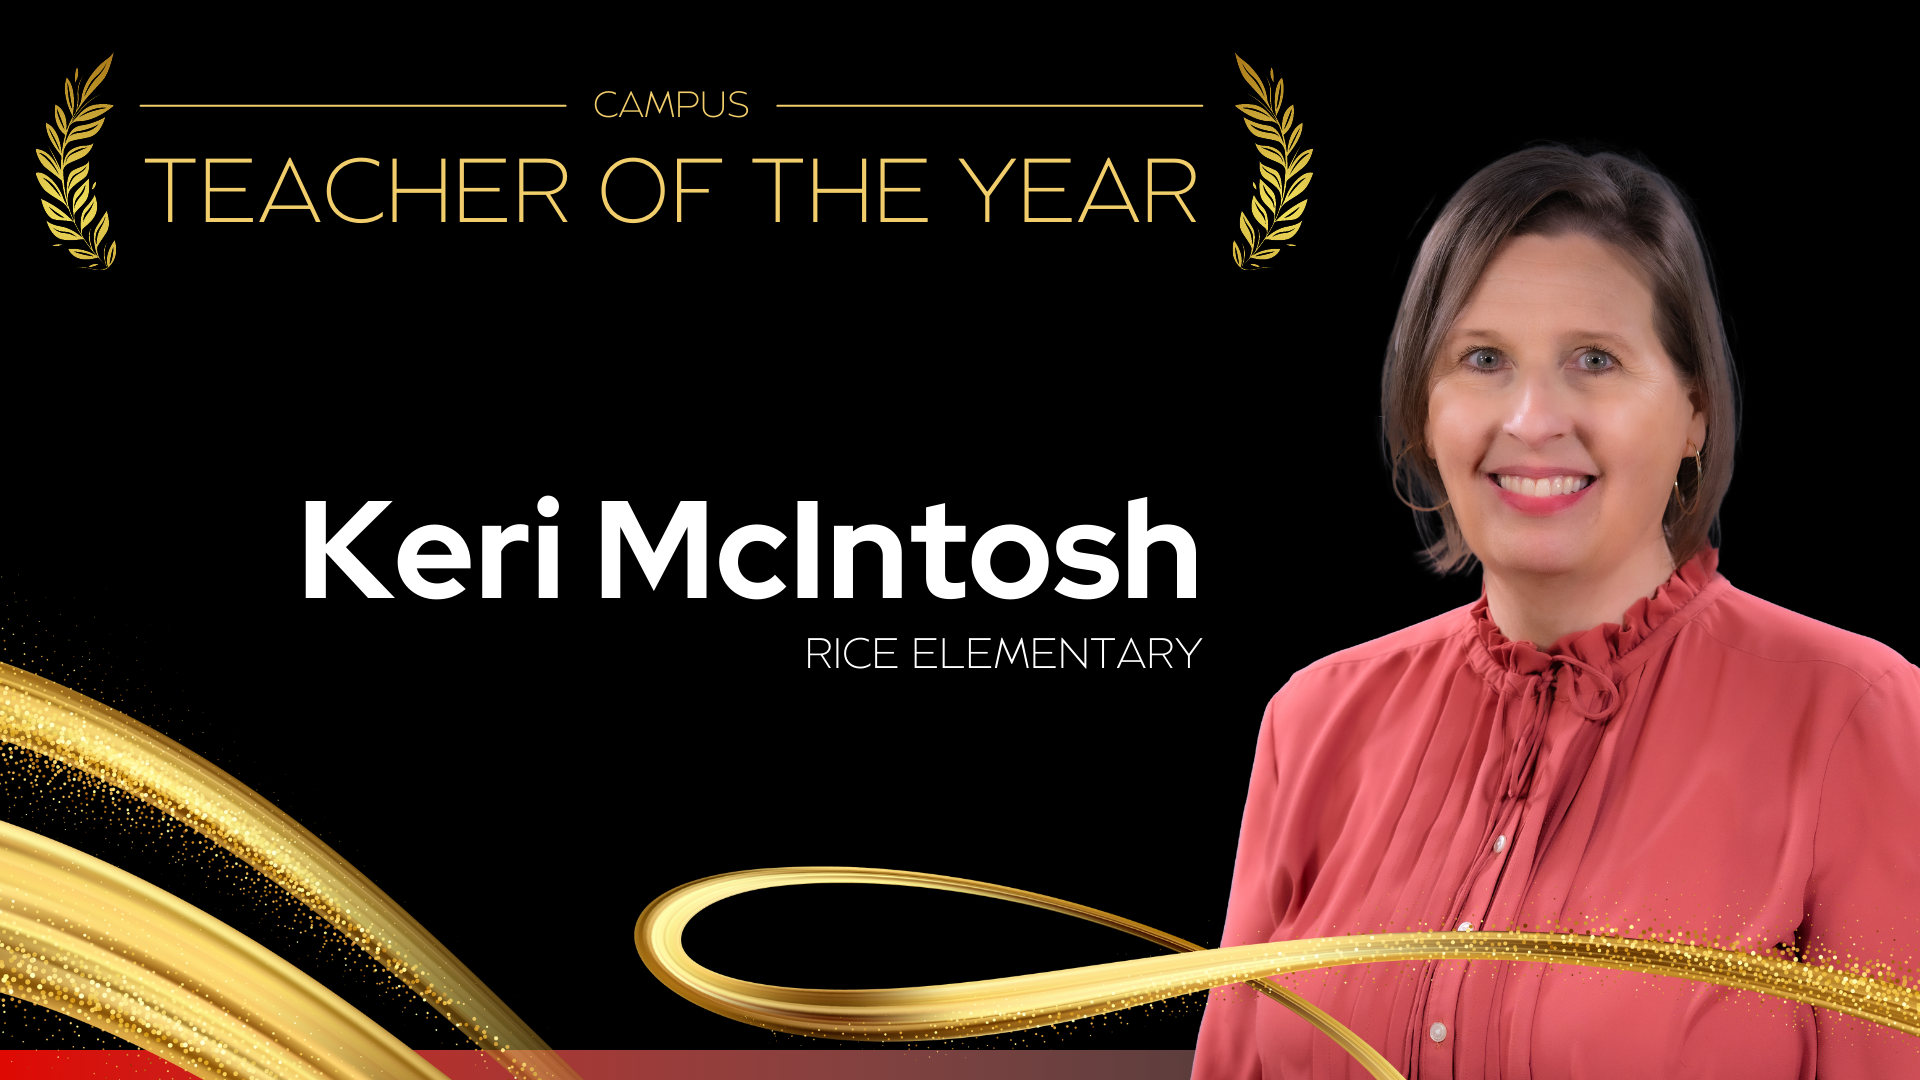 Campus Teacher of the Year Rice Elementary School - Keri McIntosh